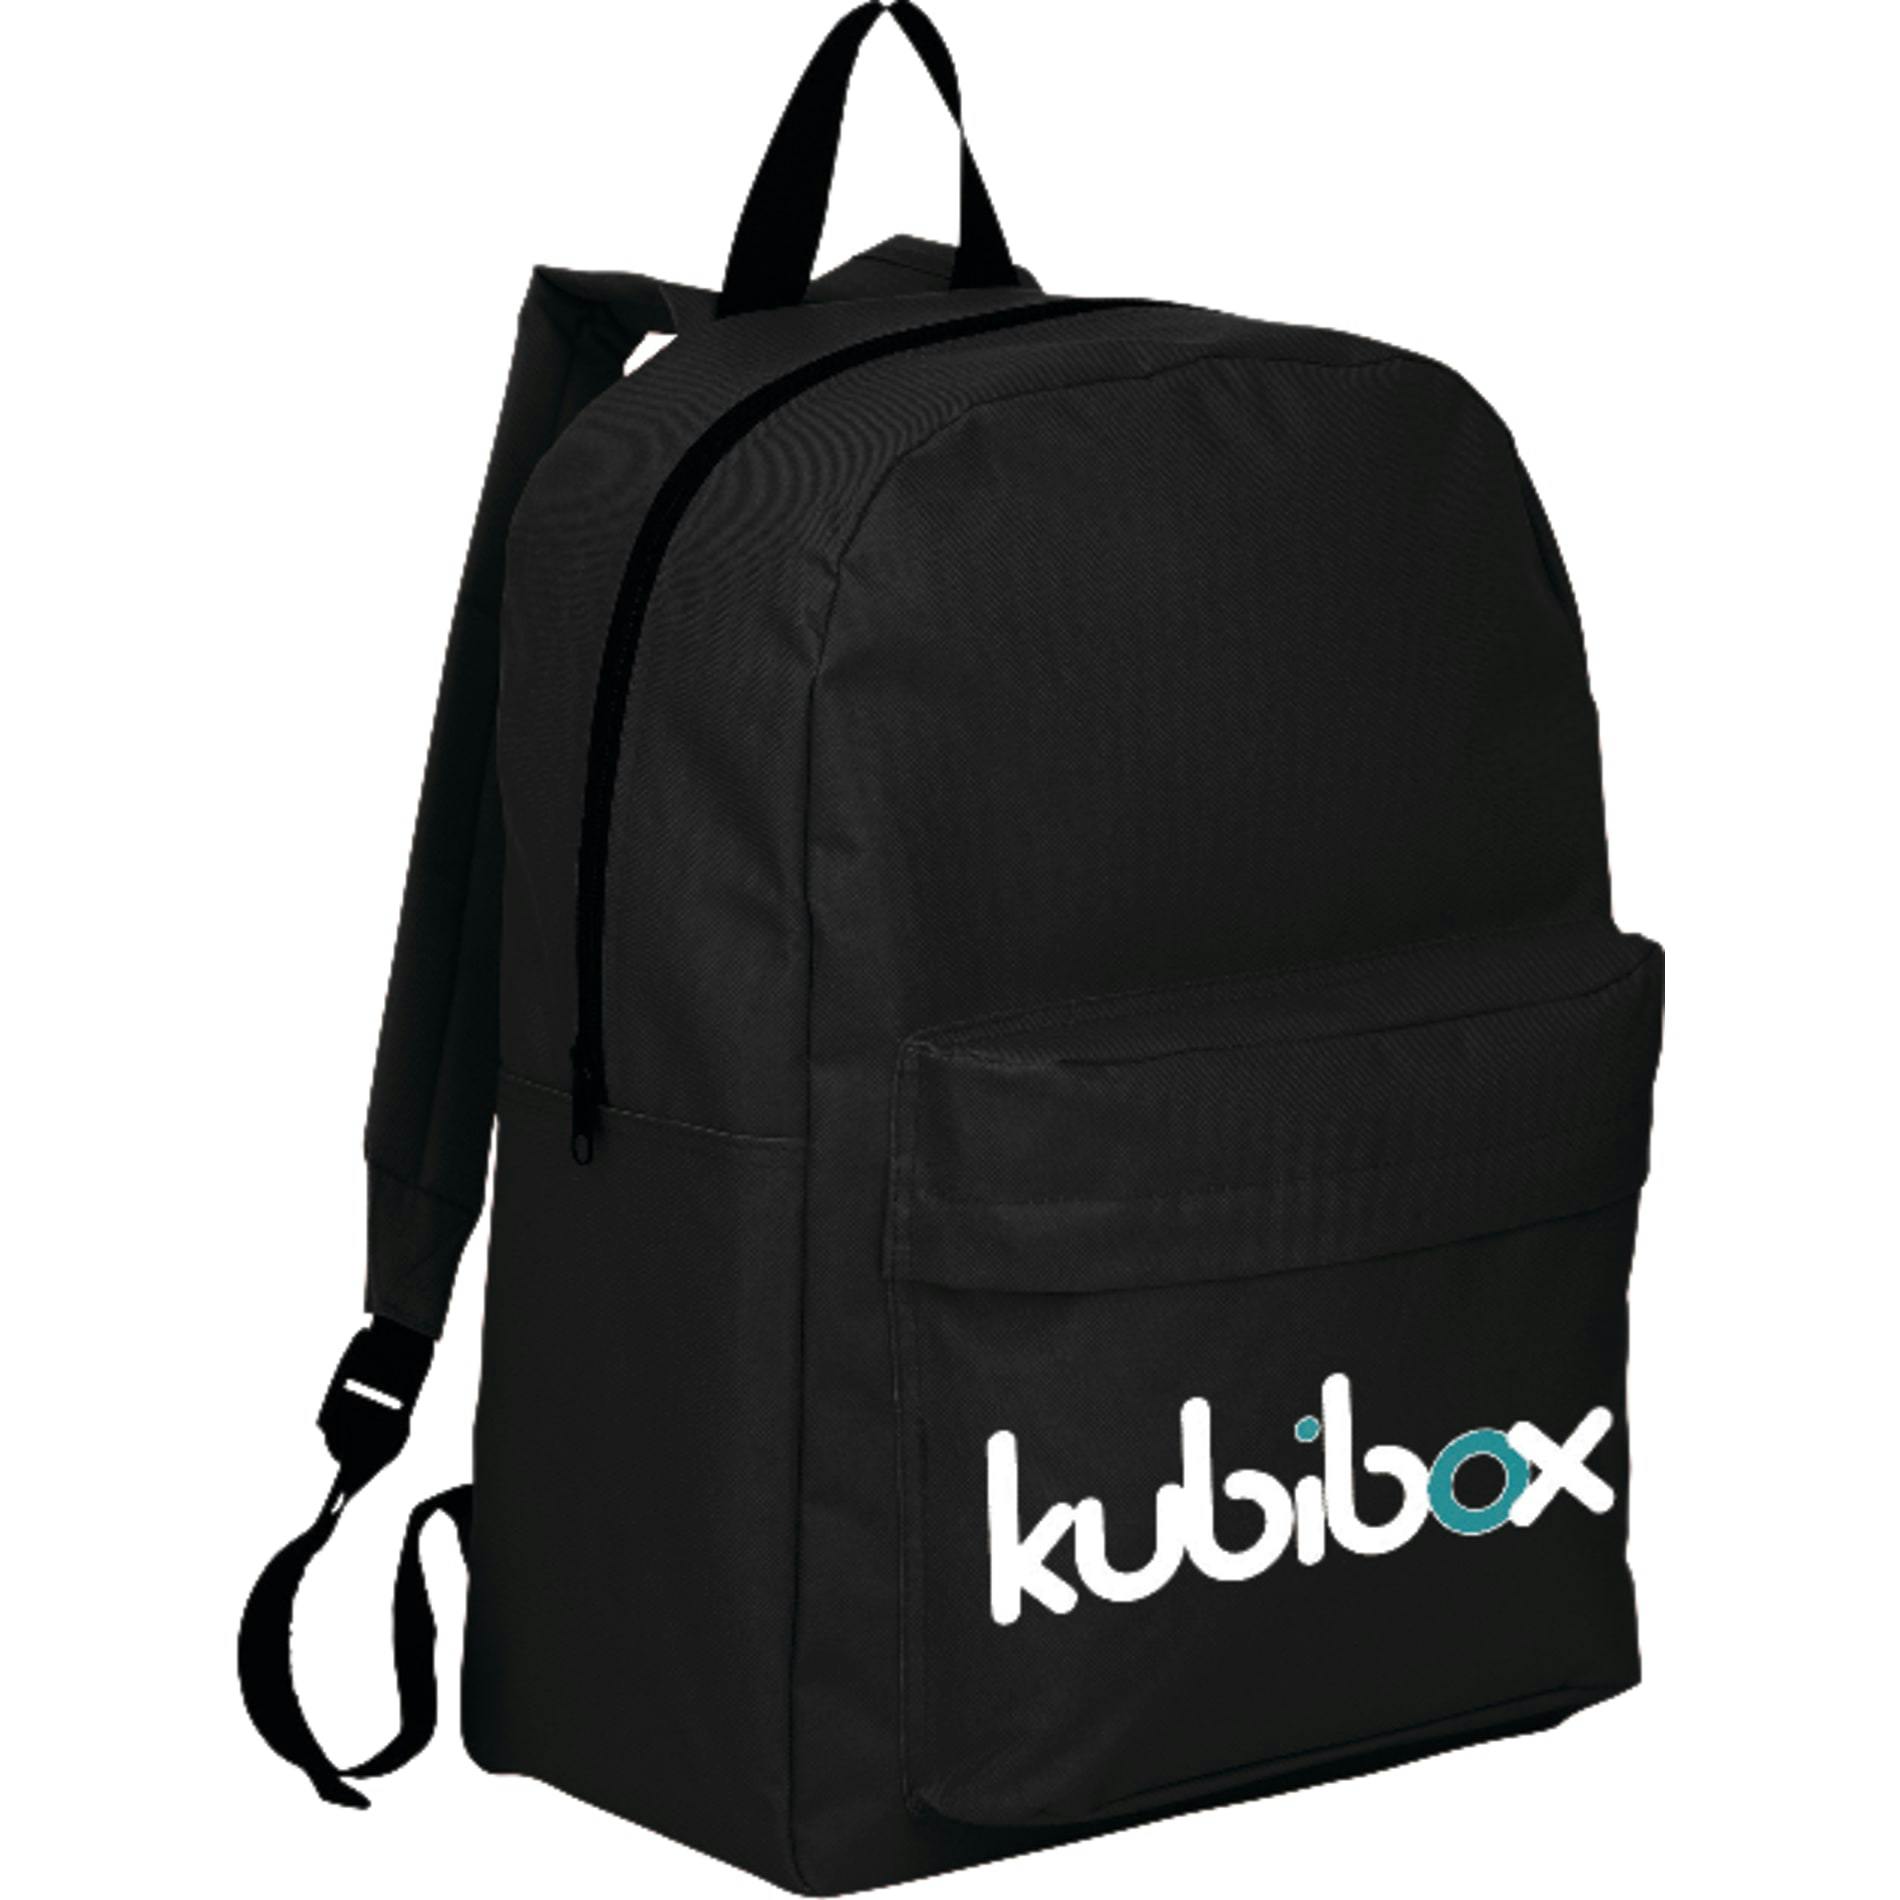 Buddy Budget 15" Computer Backpack - additional Image 3